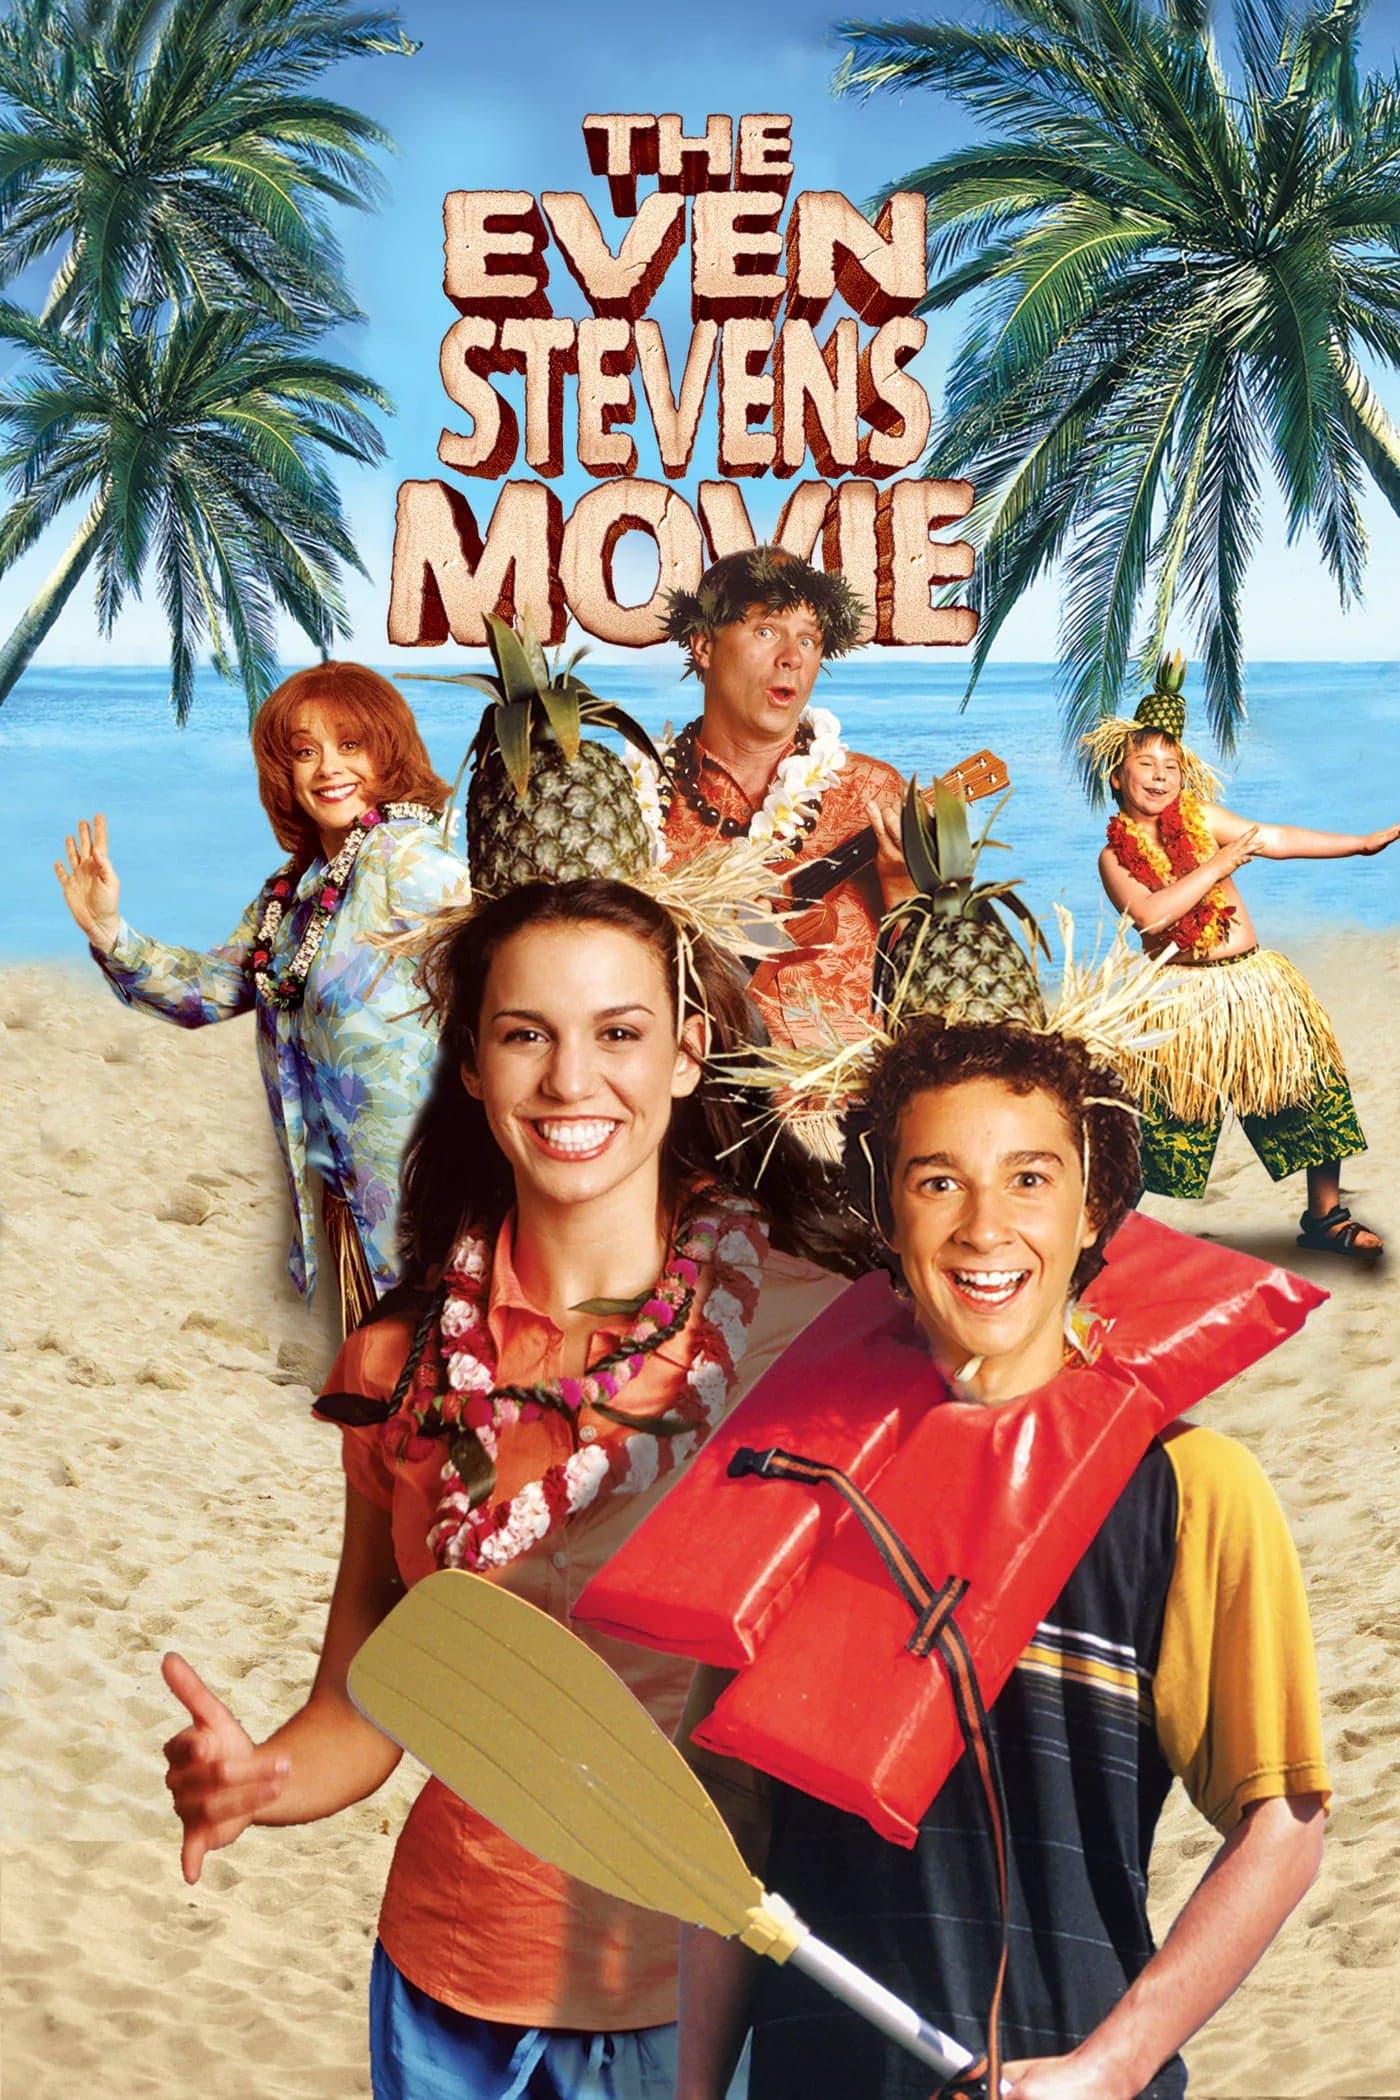 The Even Stevens Movie poster